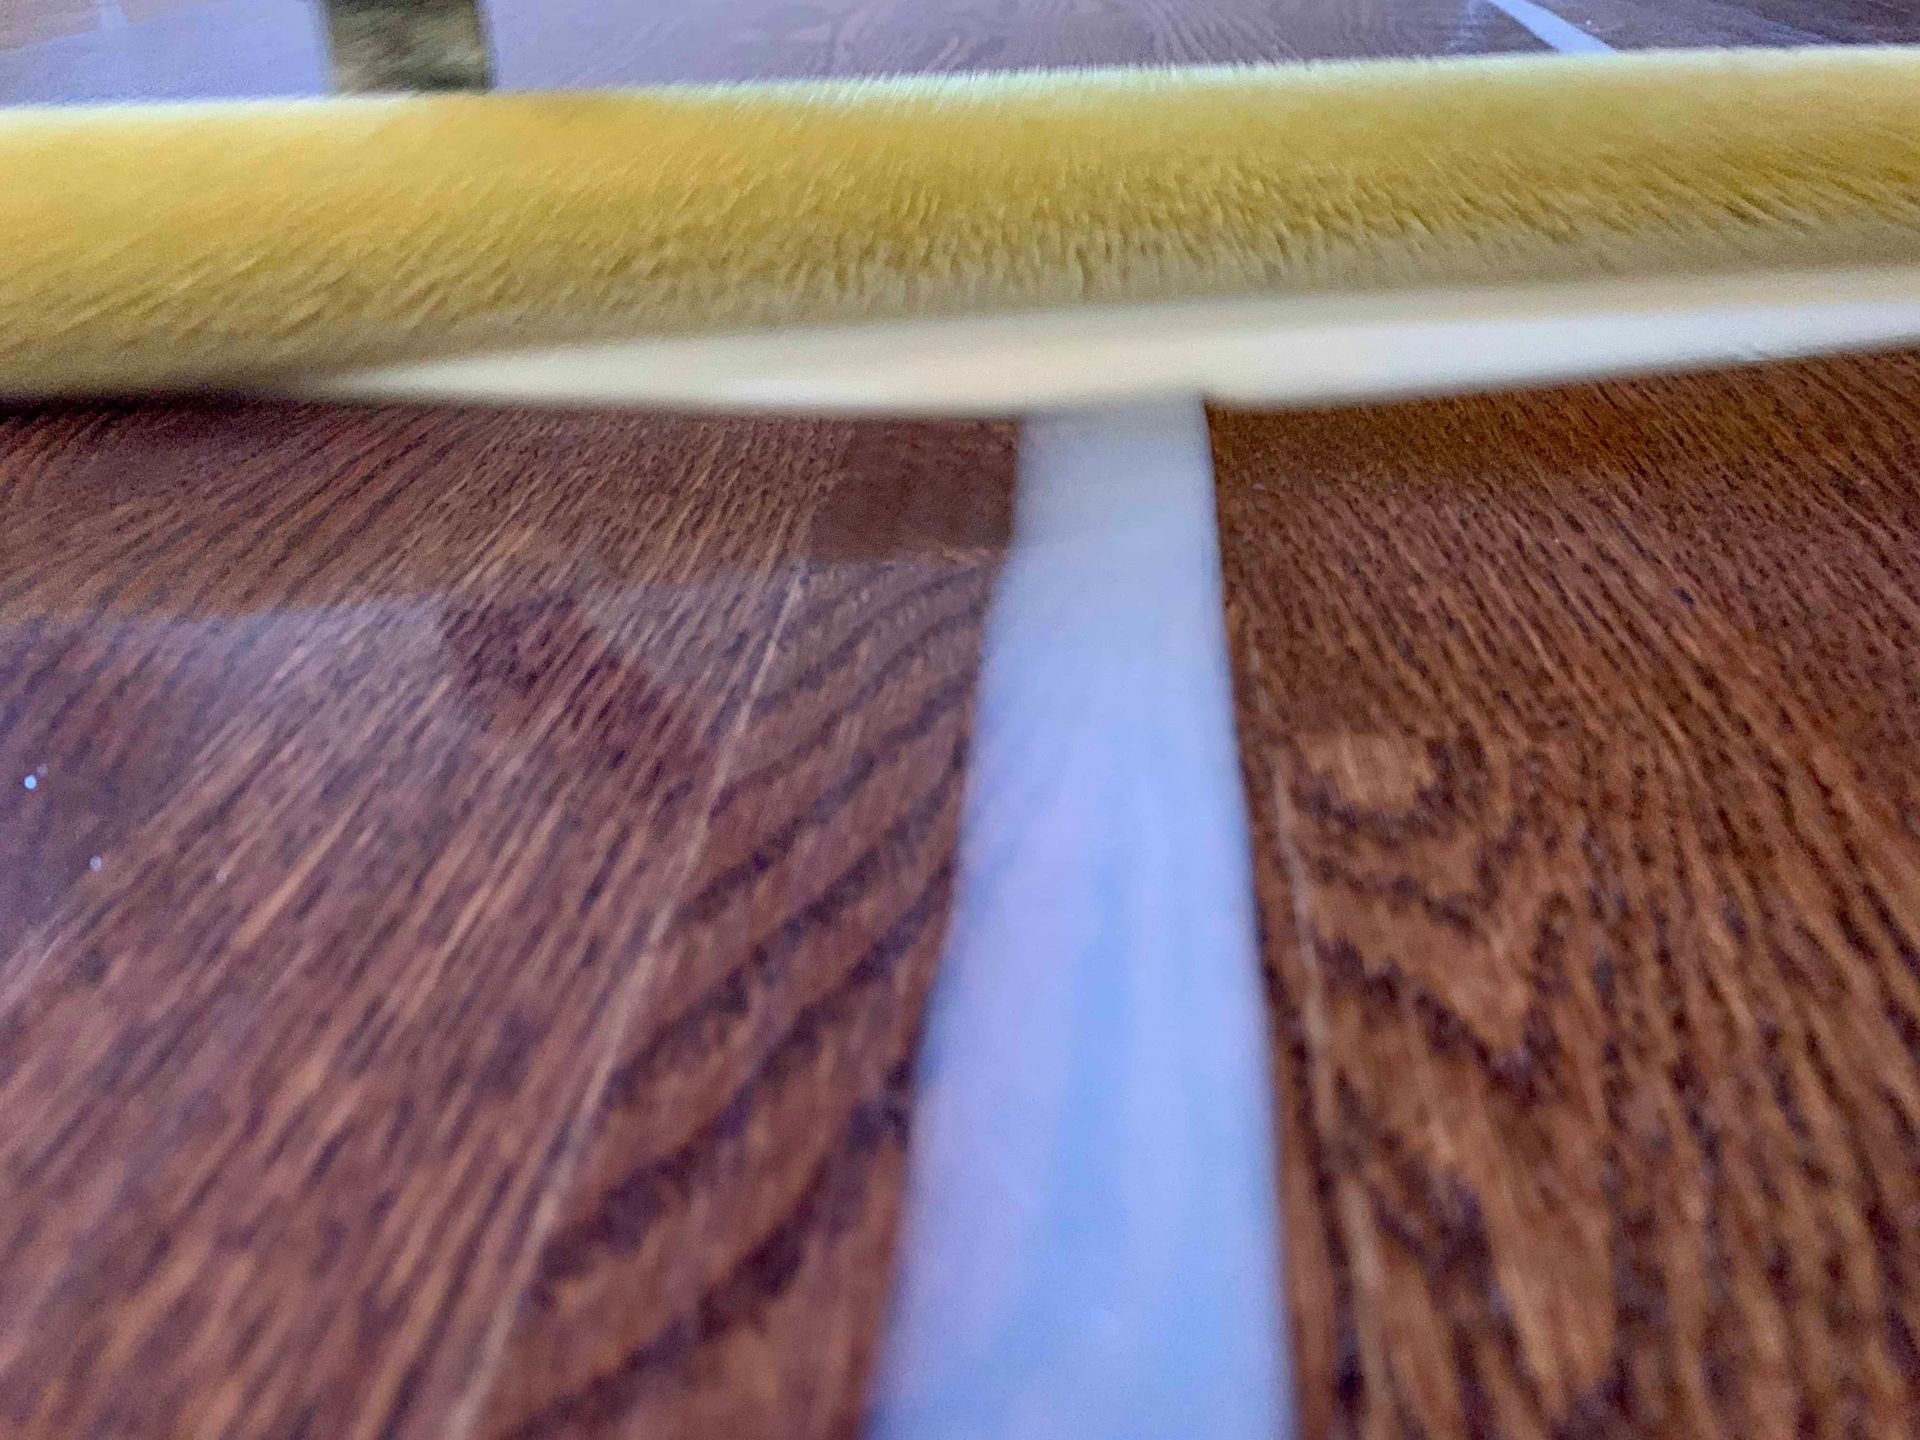 Hardwood floor with oil-based finish